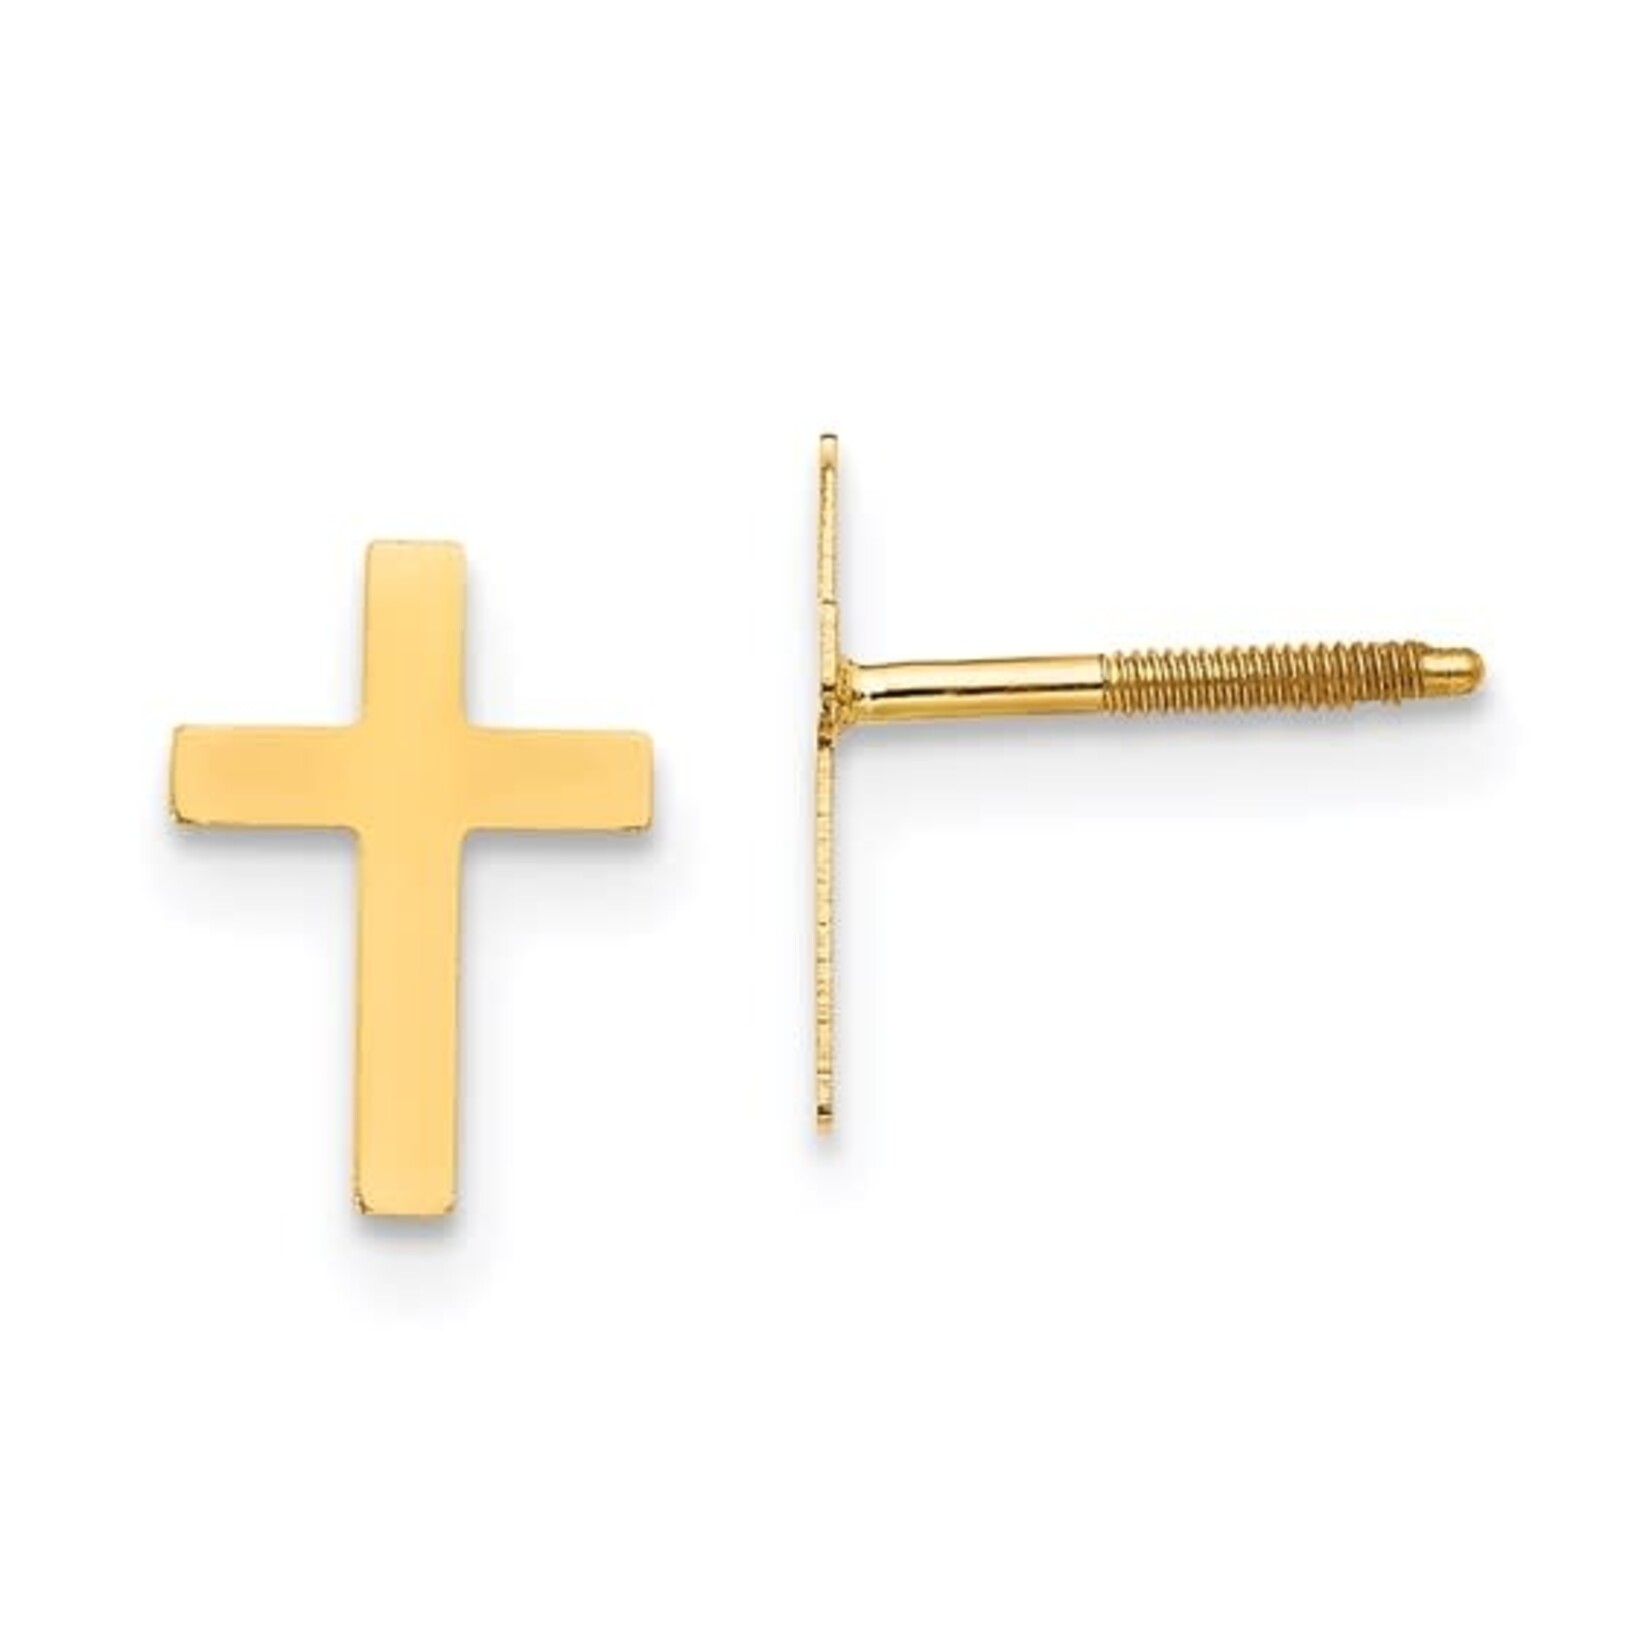 Quality Gold Inc. 14k Yellow Gold Cross Screw Post Earrings